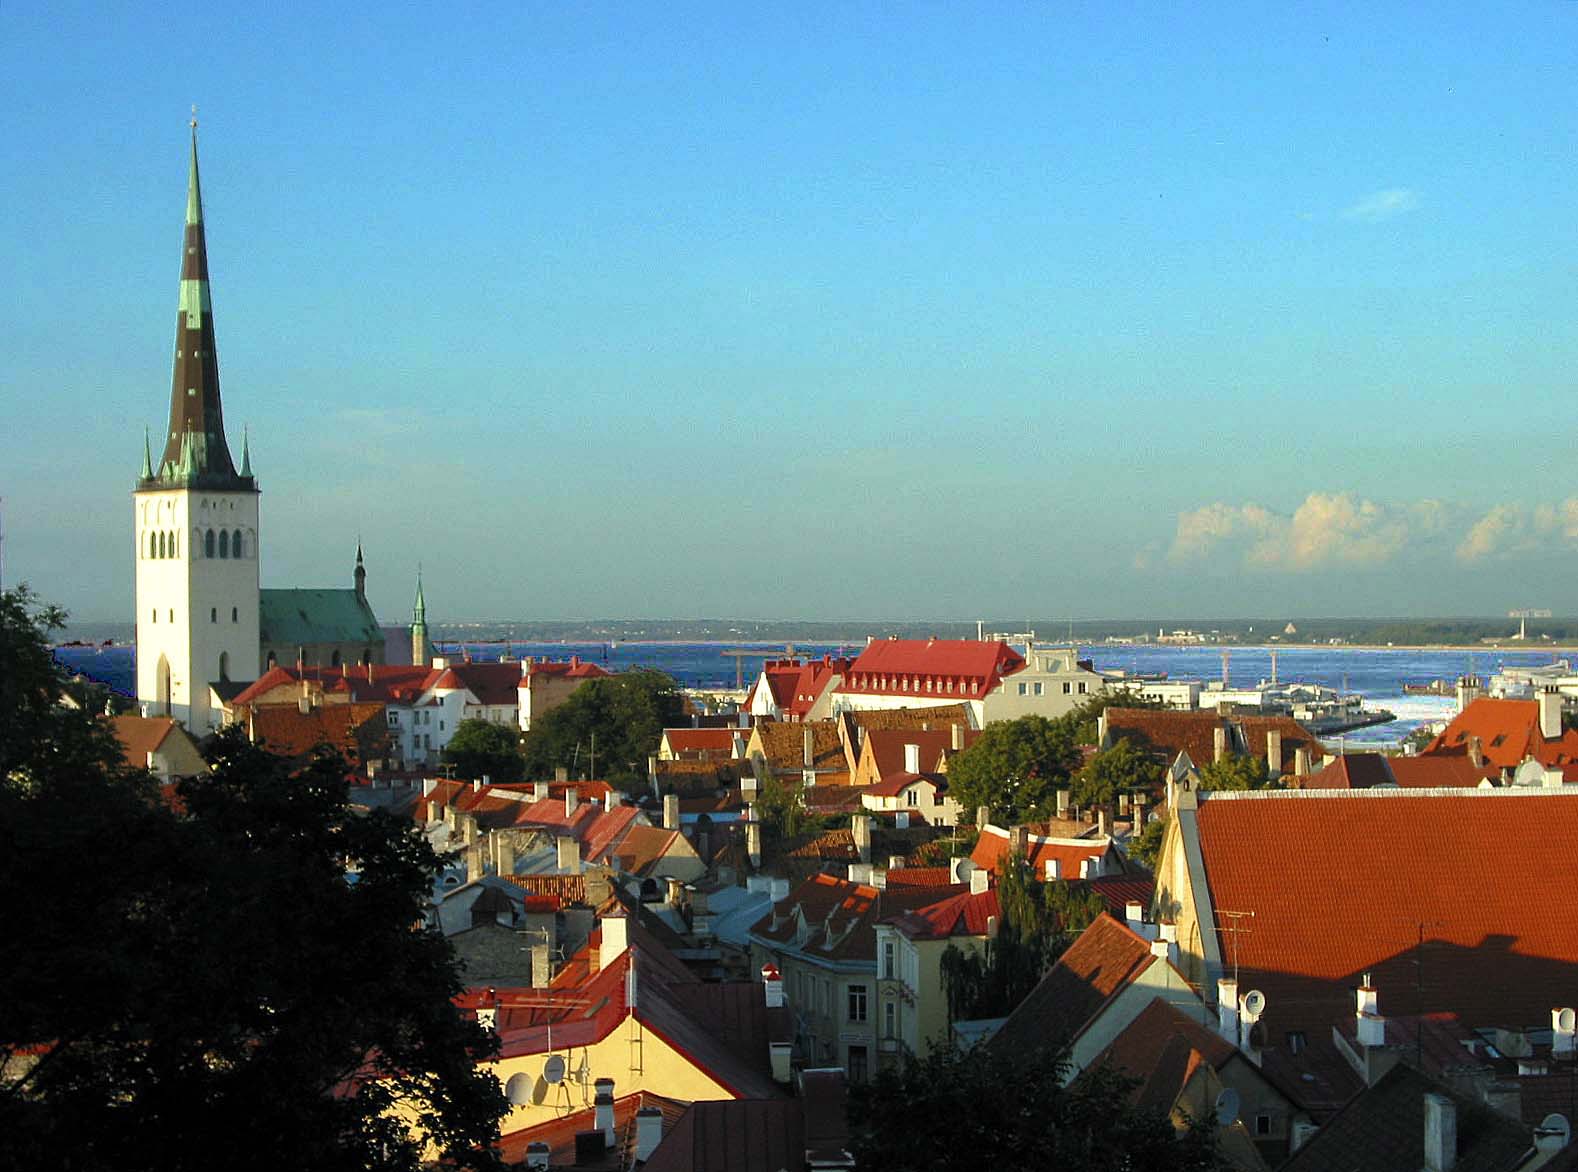 New Flights to Connect Tallinn to Berlin